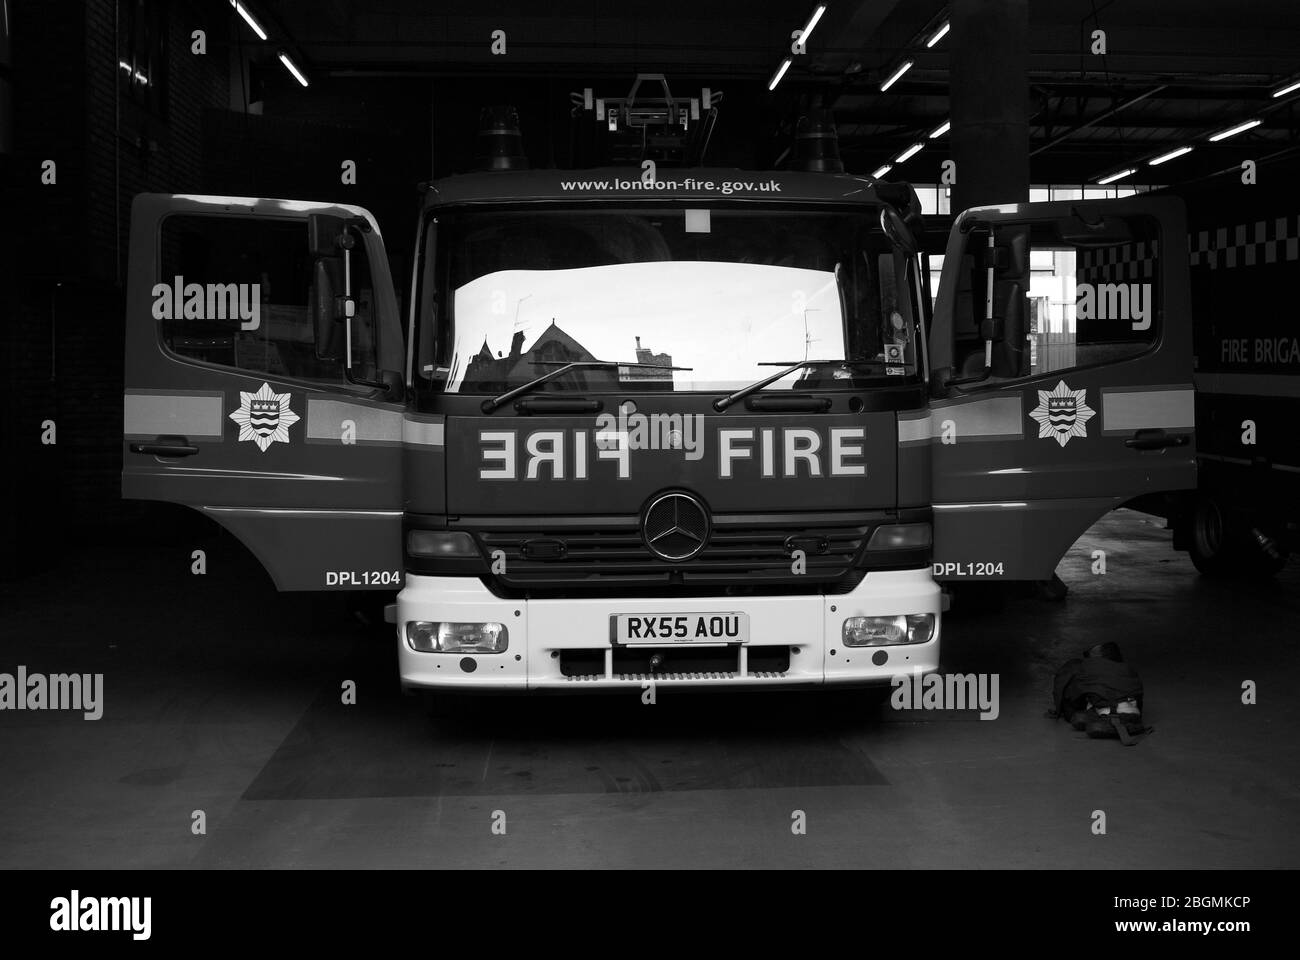 Fire engine, Upper Street, Islington, London N1 Stock Photo